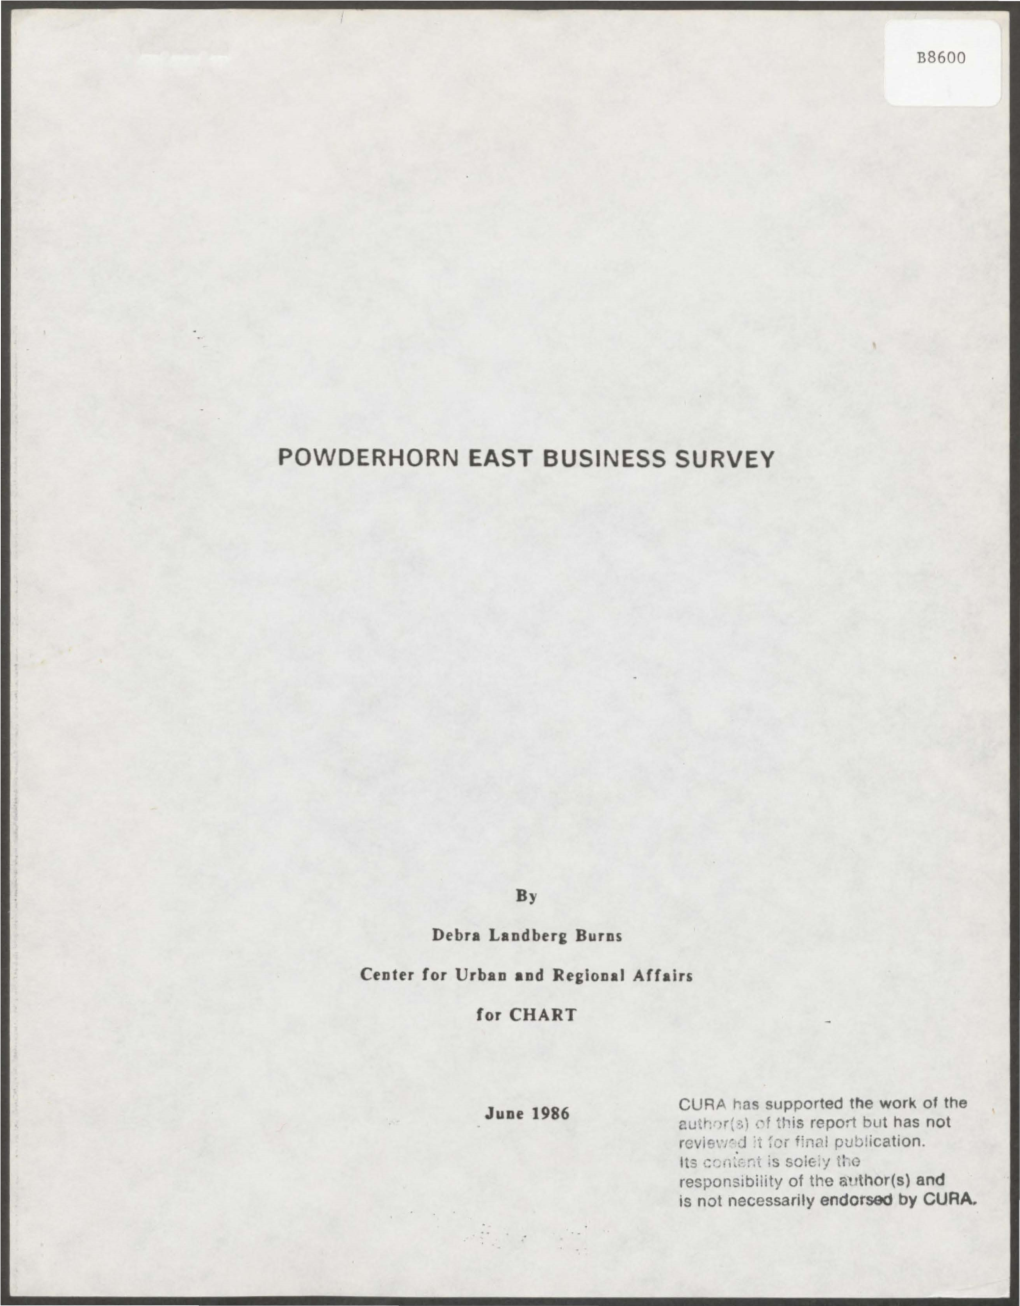 Powderhorn East Business Survey